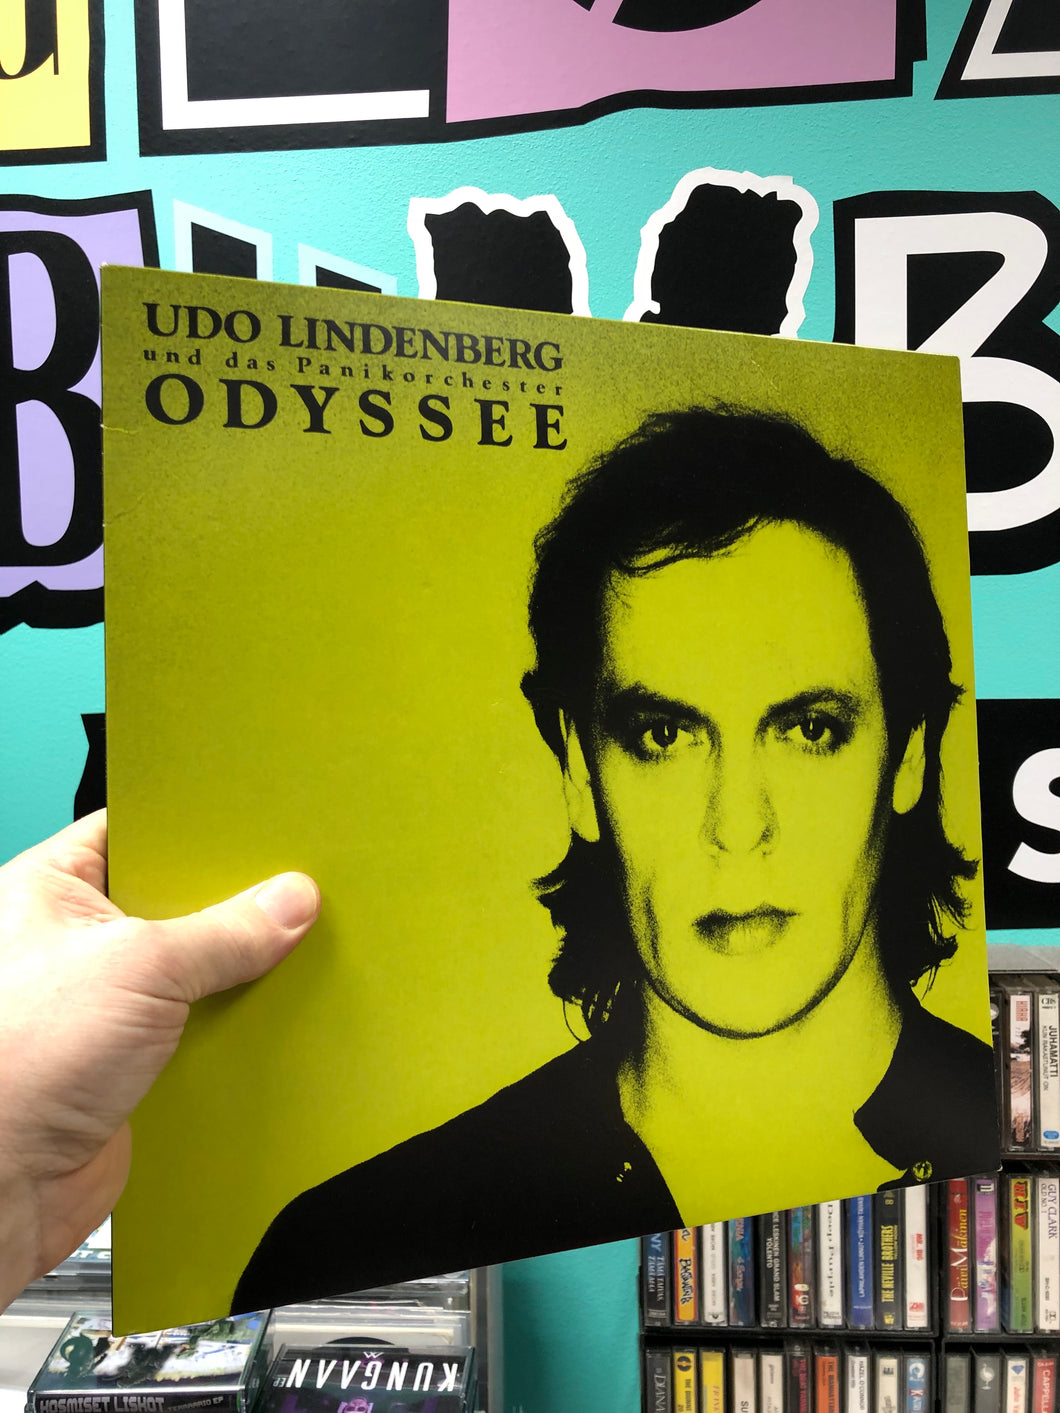 Udo Lindenberg: Odyssee, Germany 2017, reissue, remastered